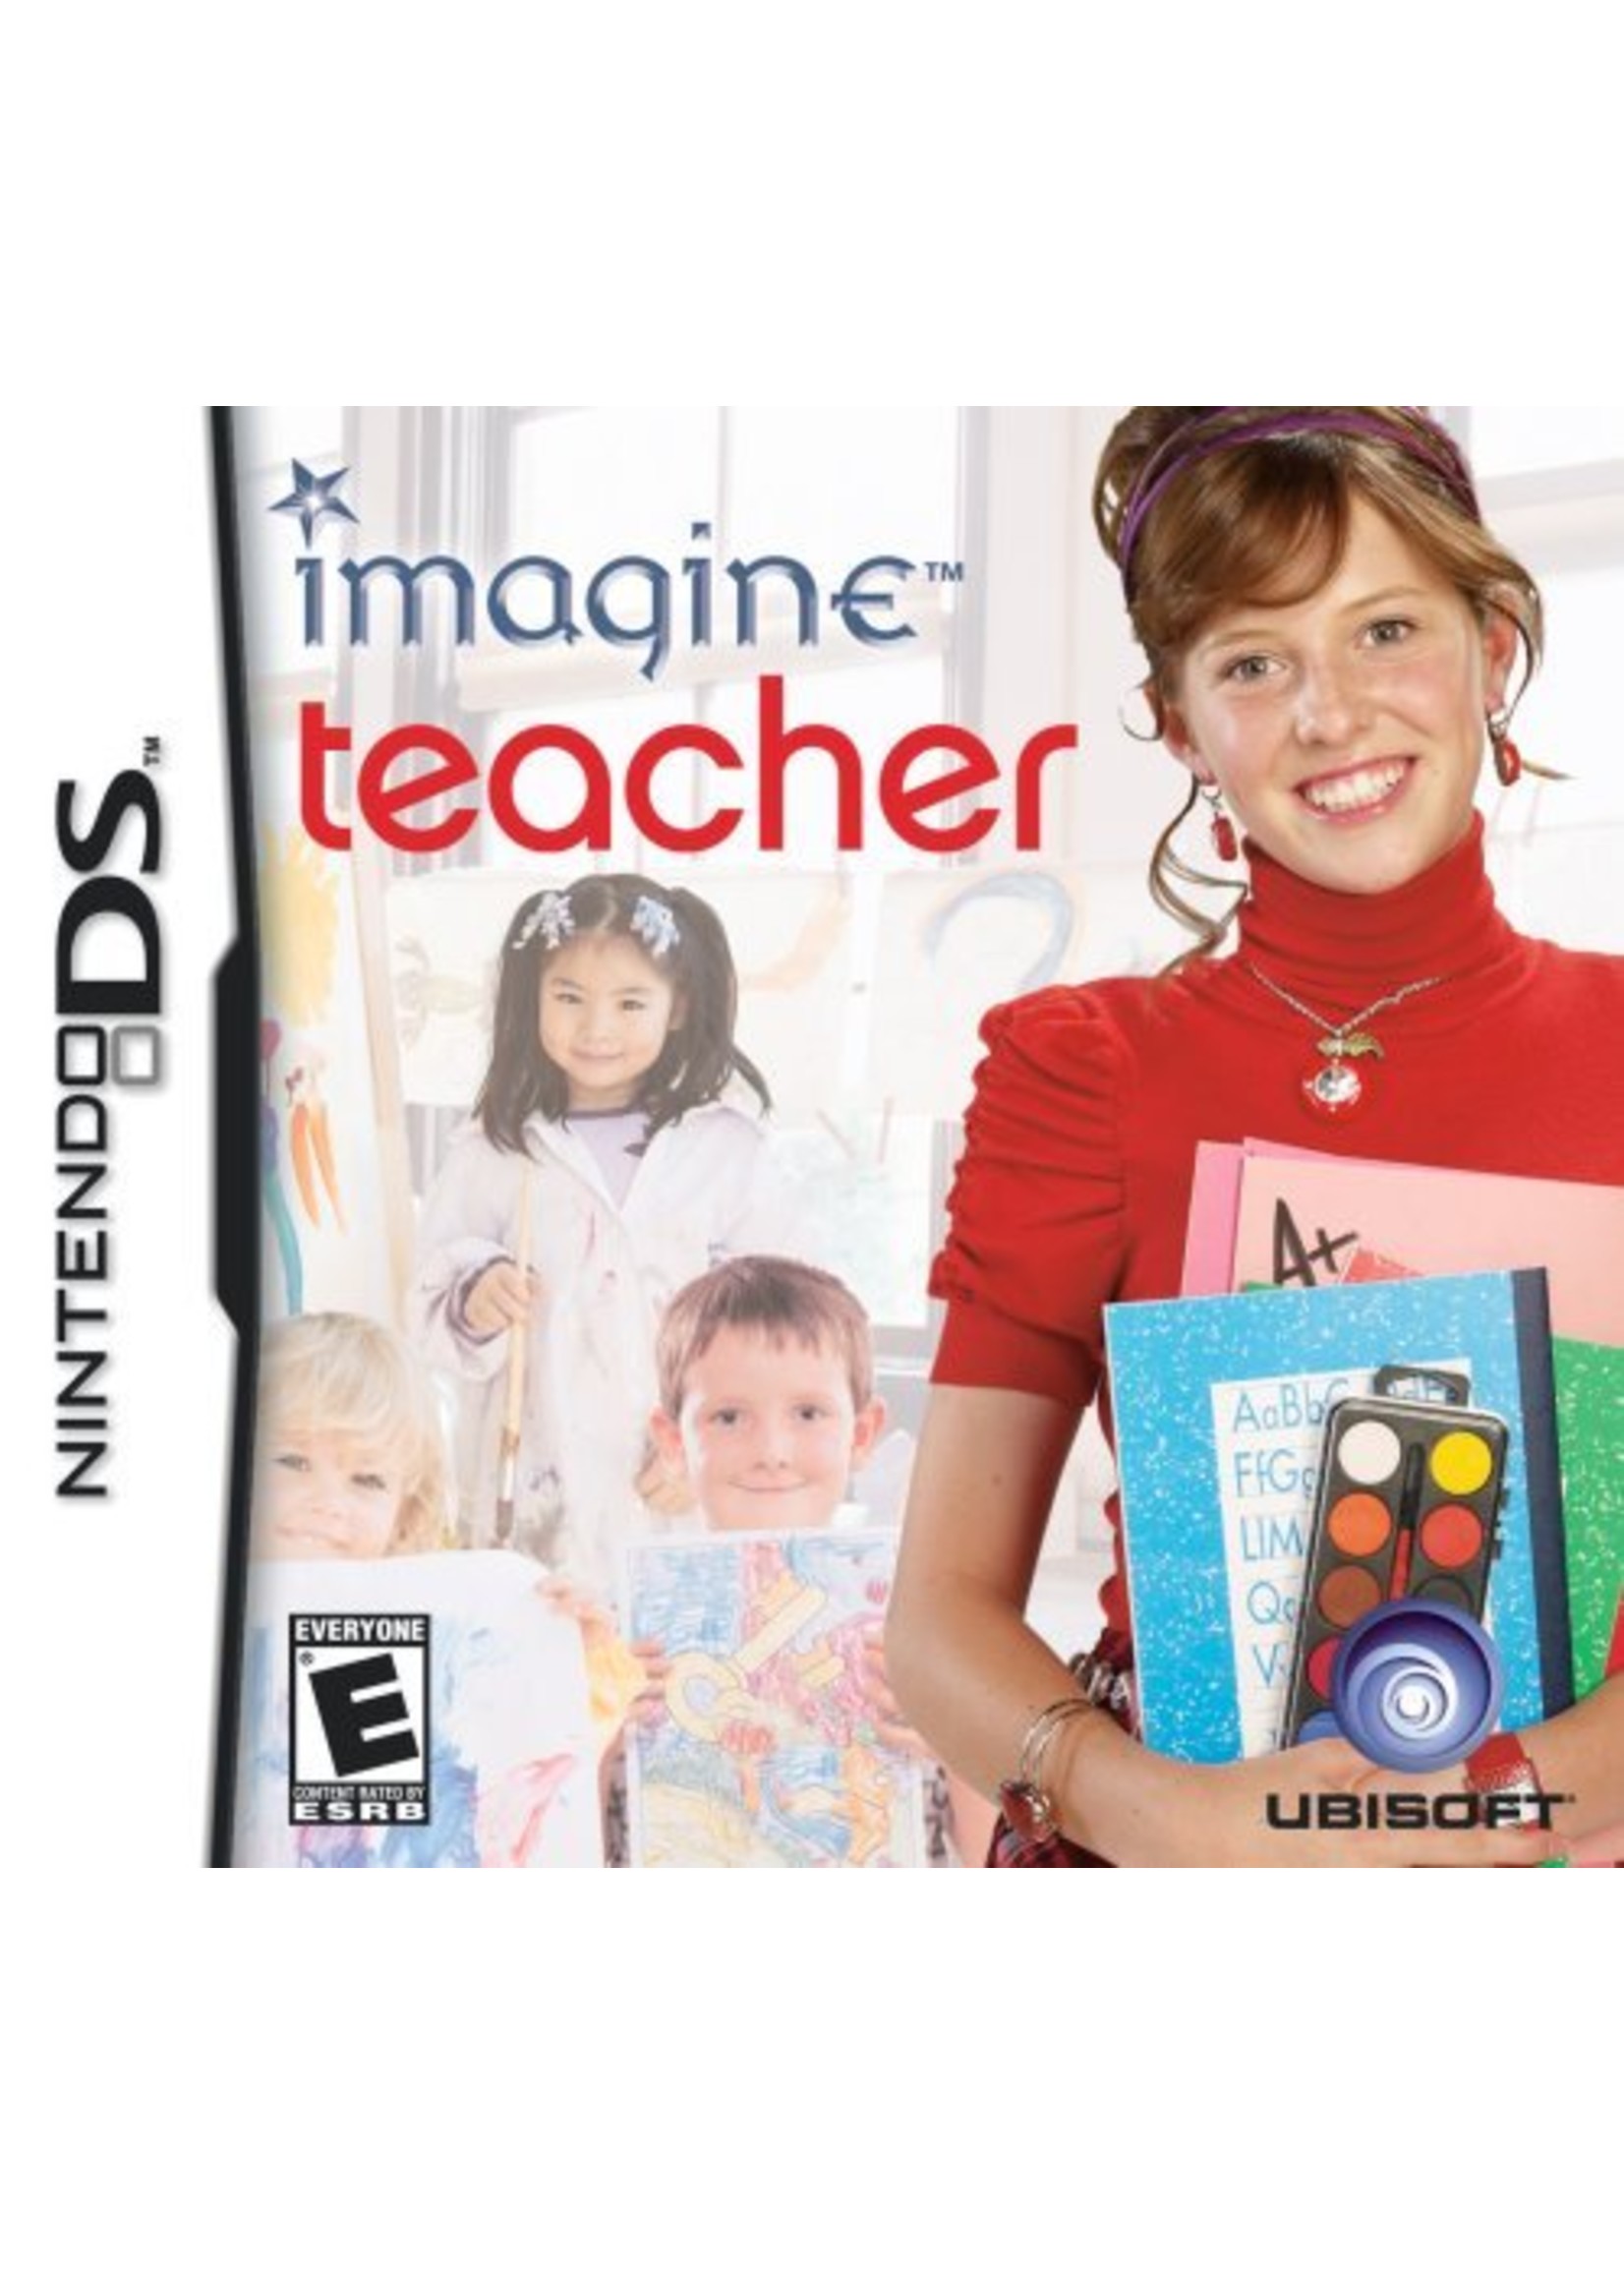 Imagine: TEACHer - NDS PrePlayed